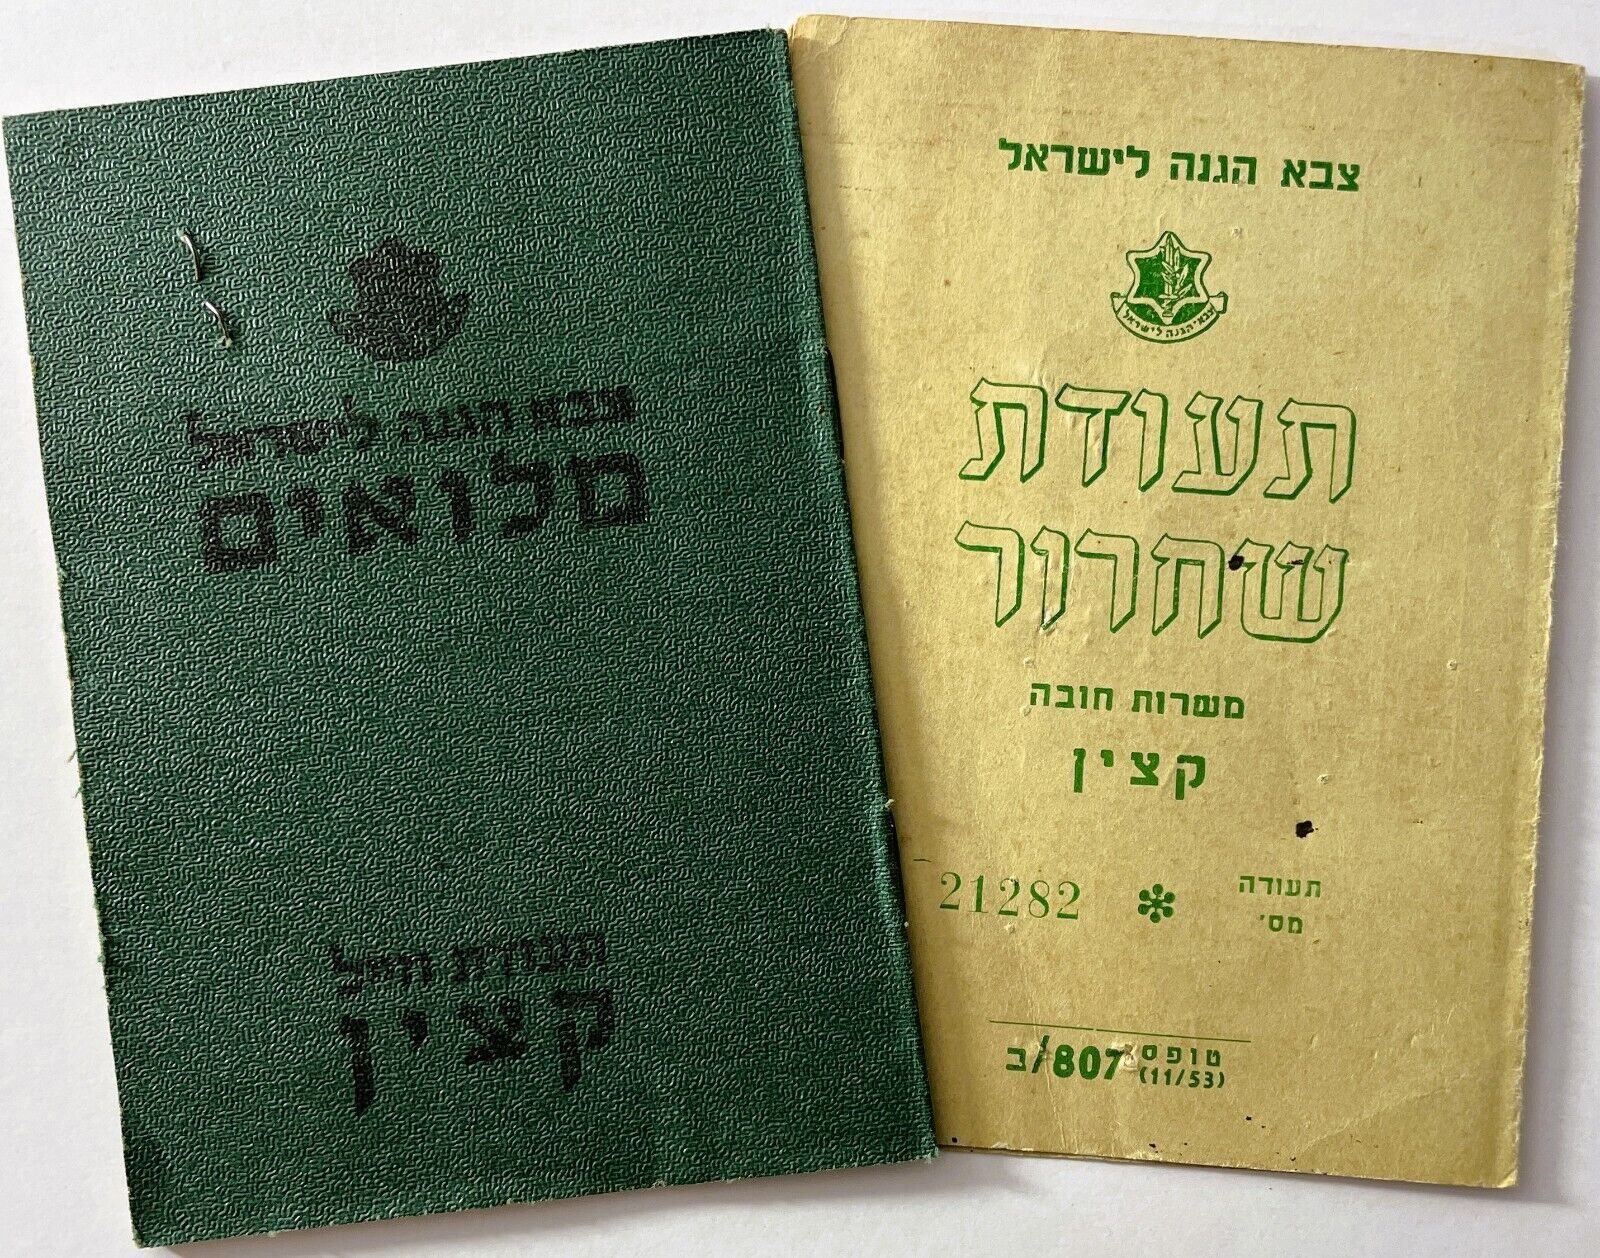 IDF/ZAHAL Woman’s army service & release certificates. Service period: 1953 - 56